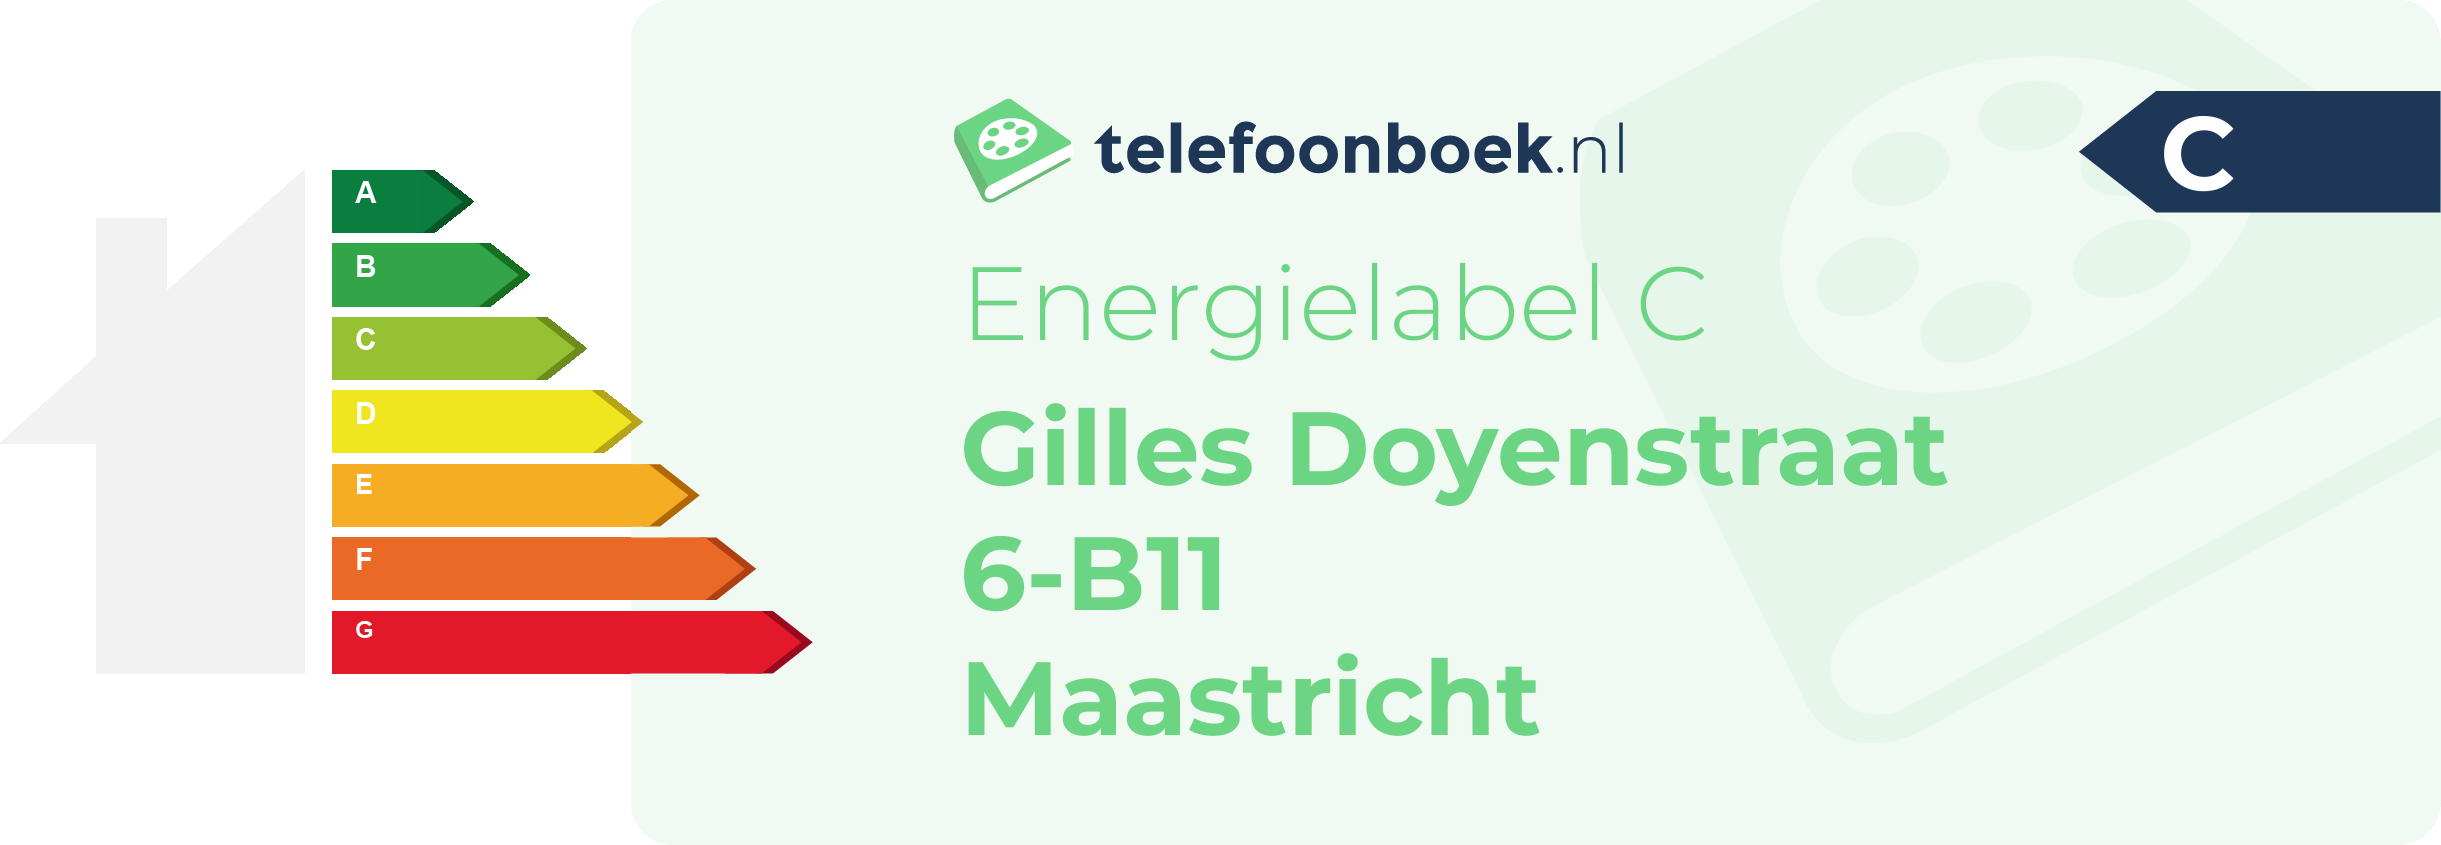 Energielabel Gilles Doyenstraat 6-B11 Maastricht